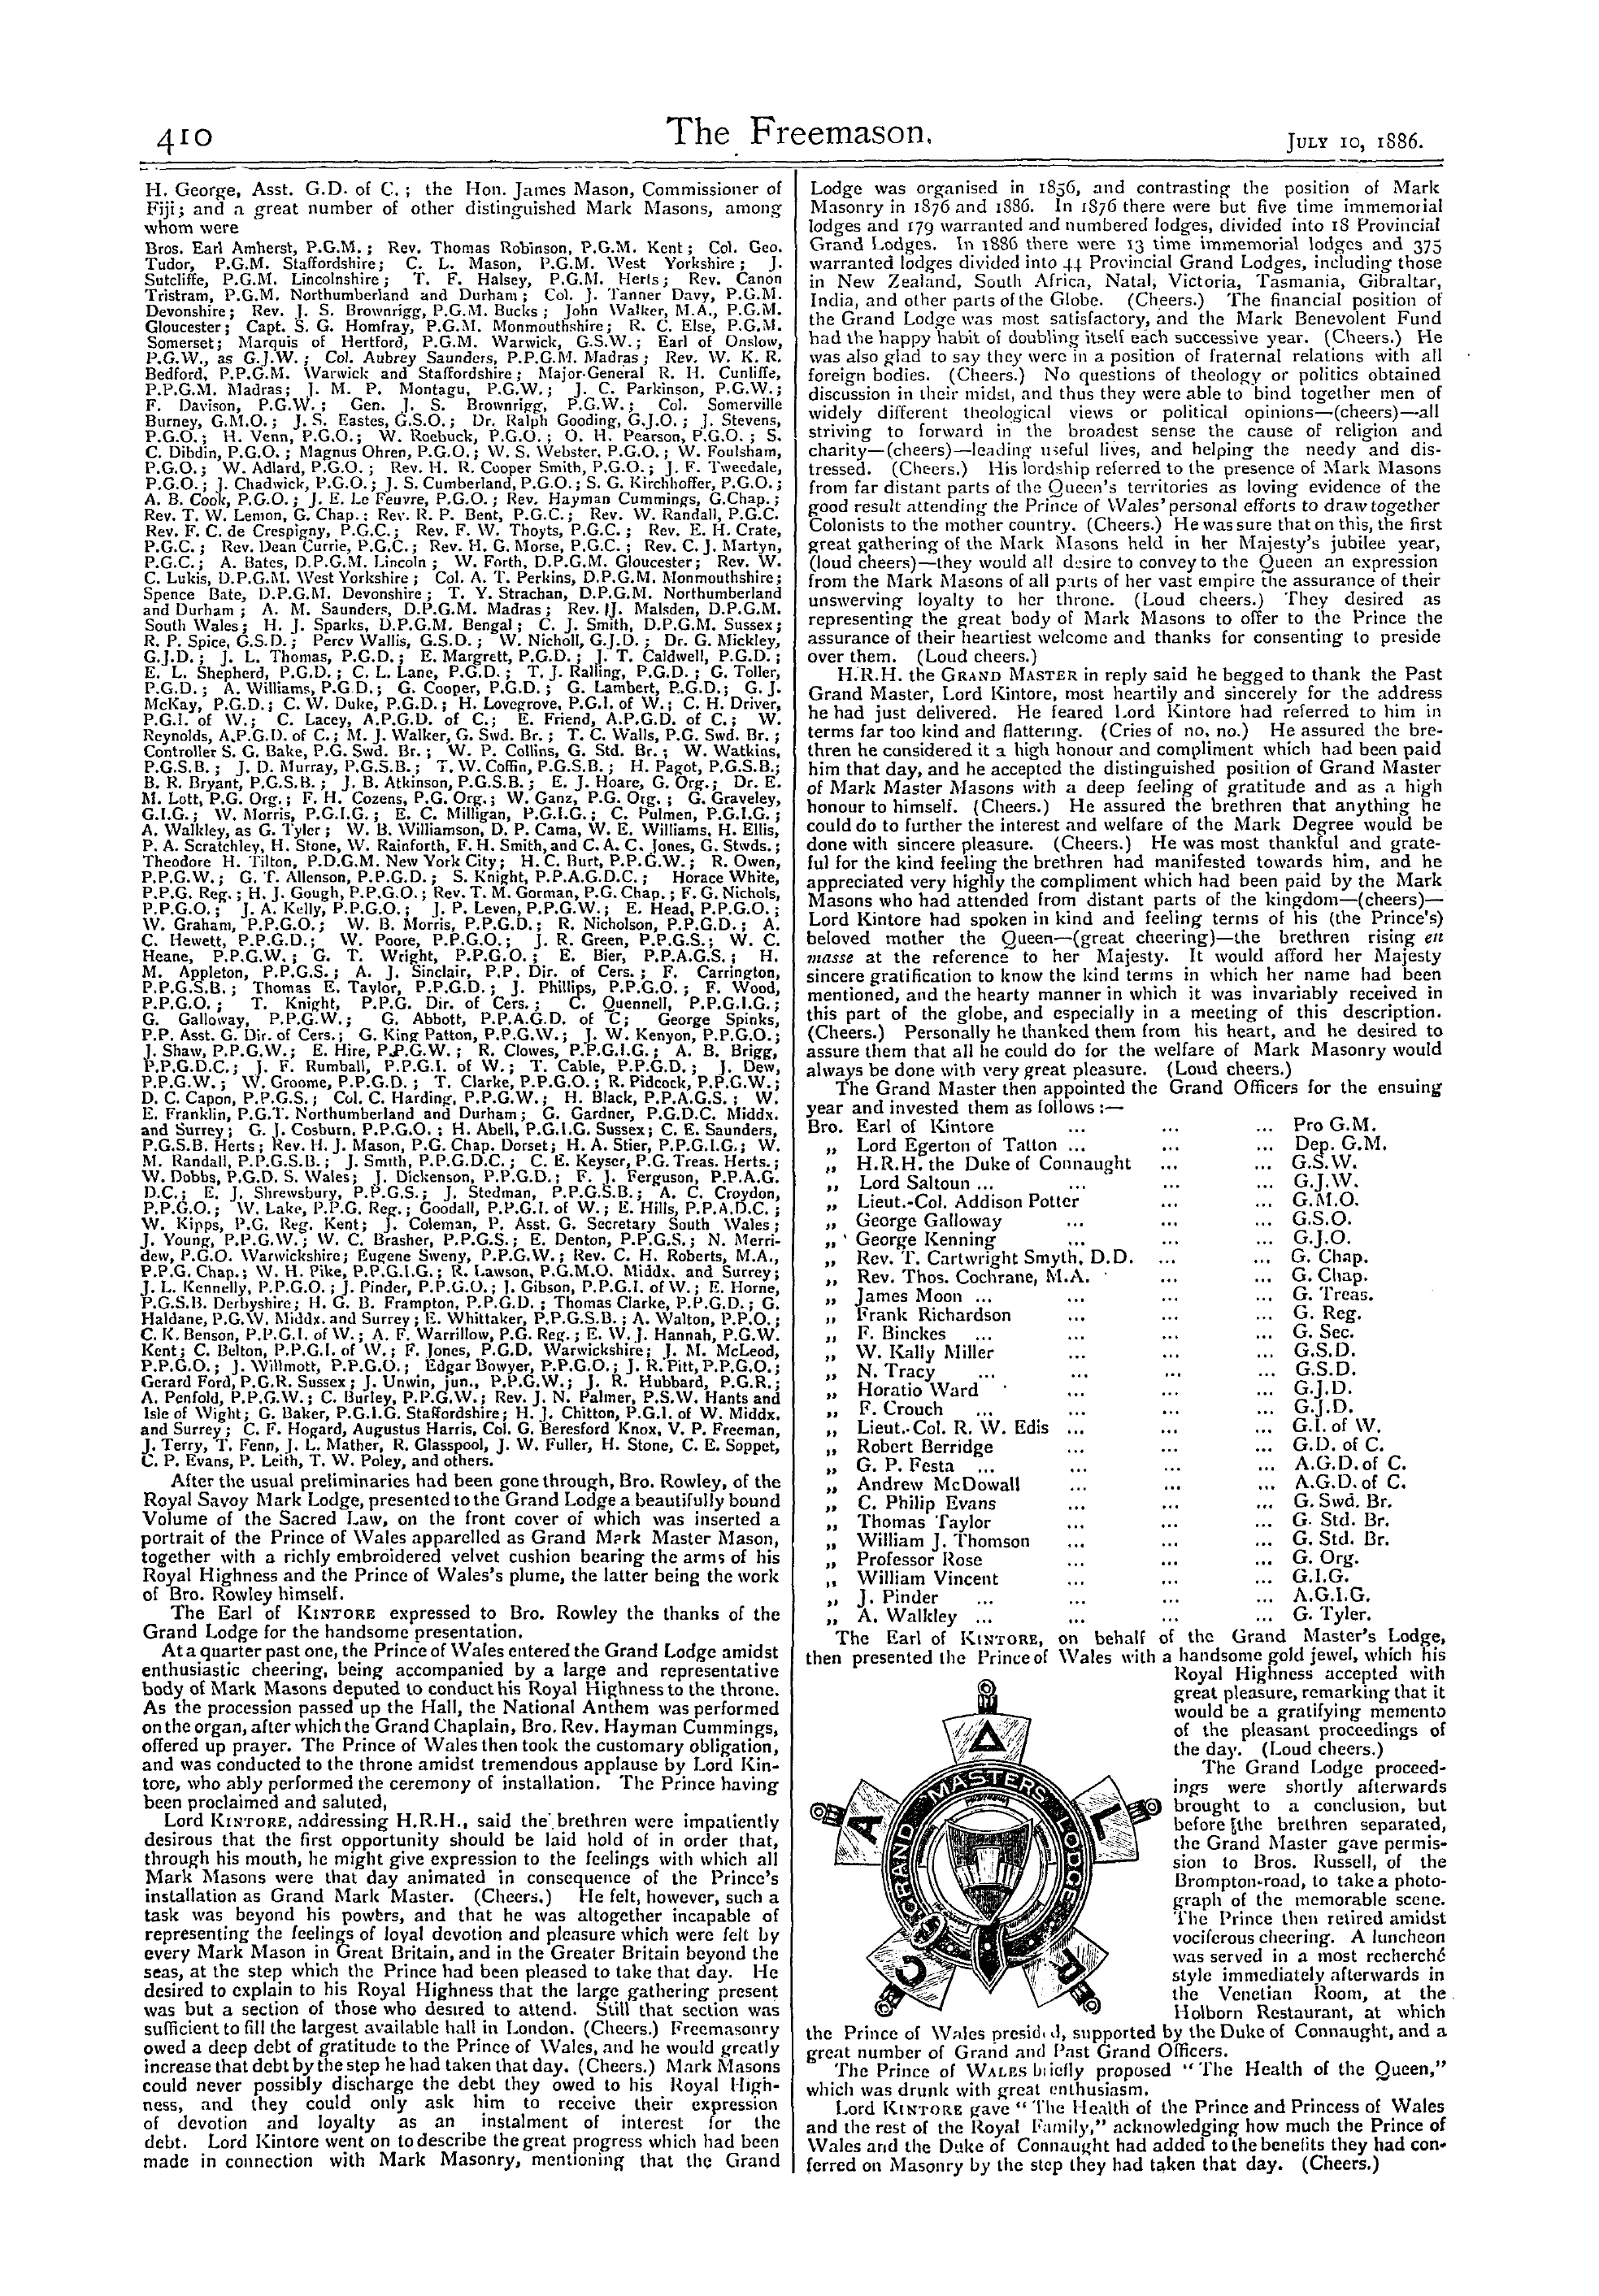 The Freemason: 1886-07-10: 2